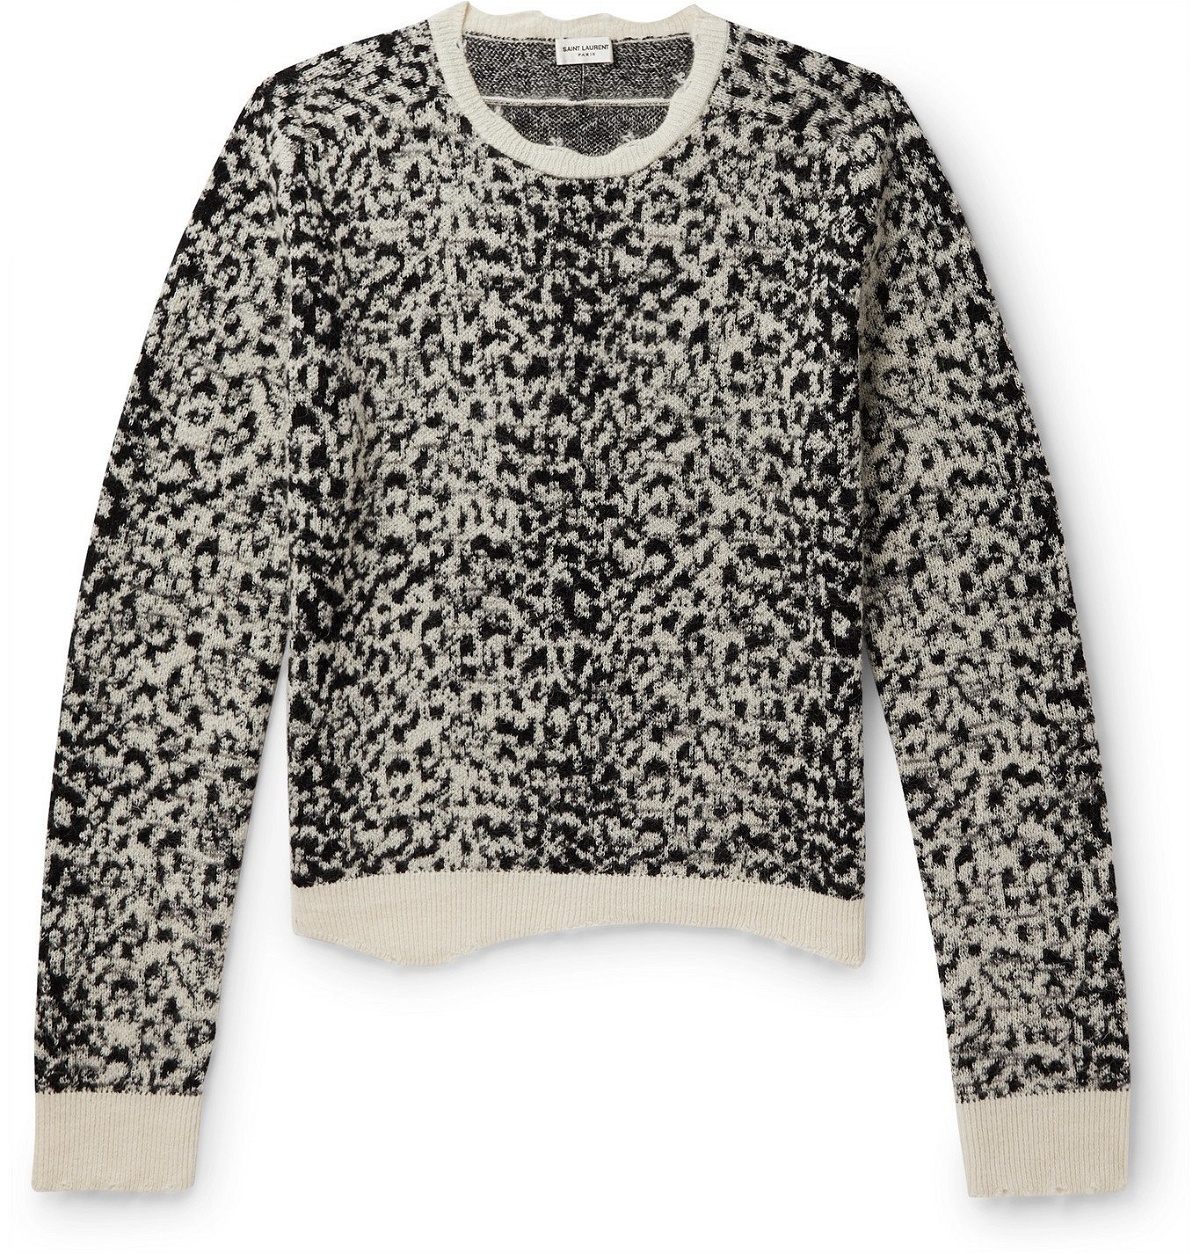 SAINT LAURENT - Distressed Leopard Jacquard Sweater - Neutrals